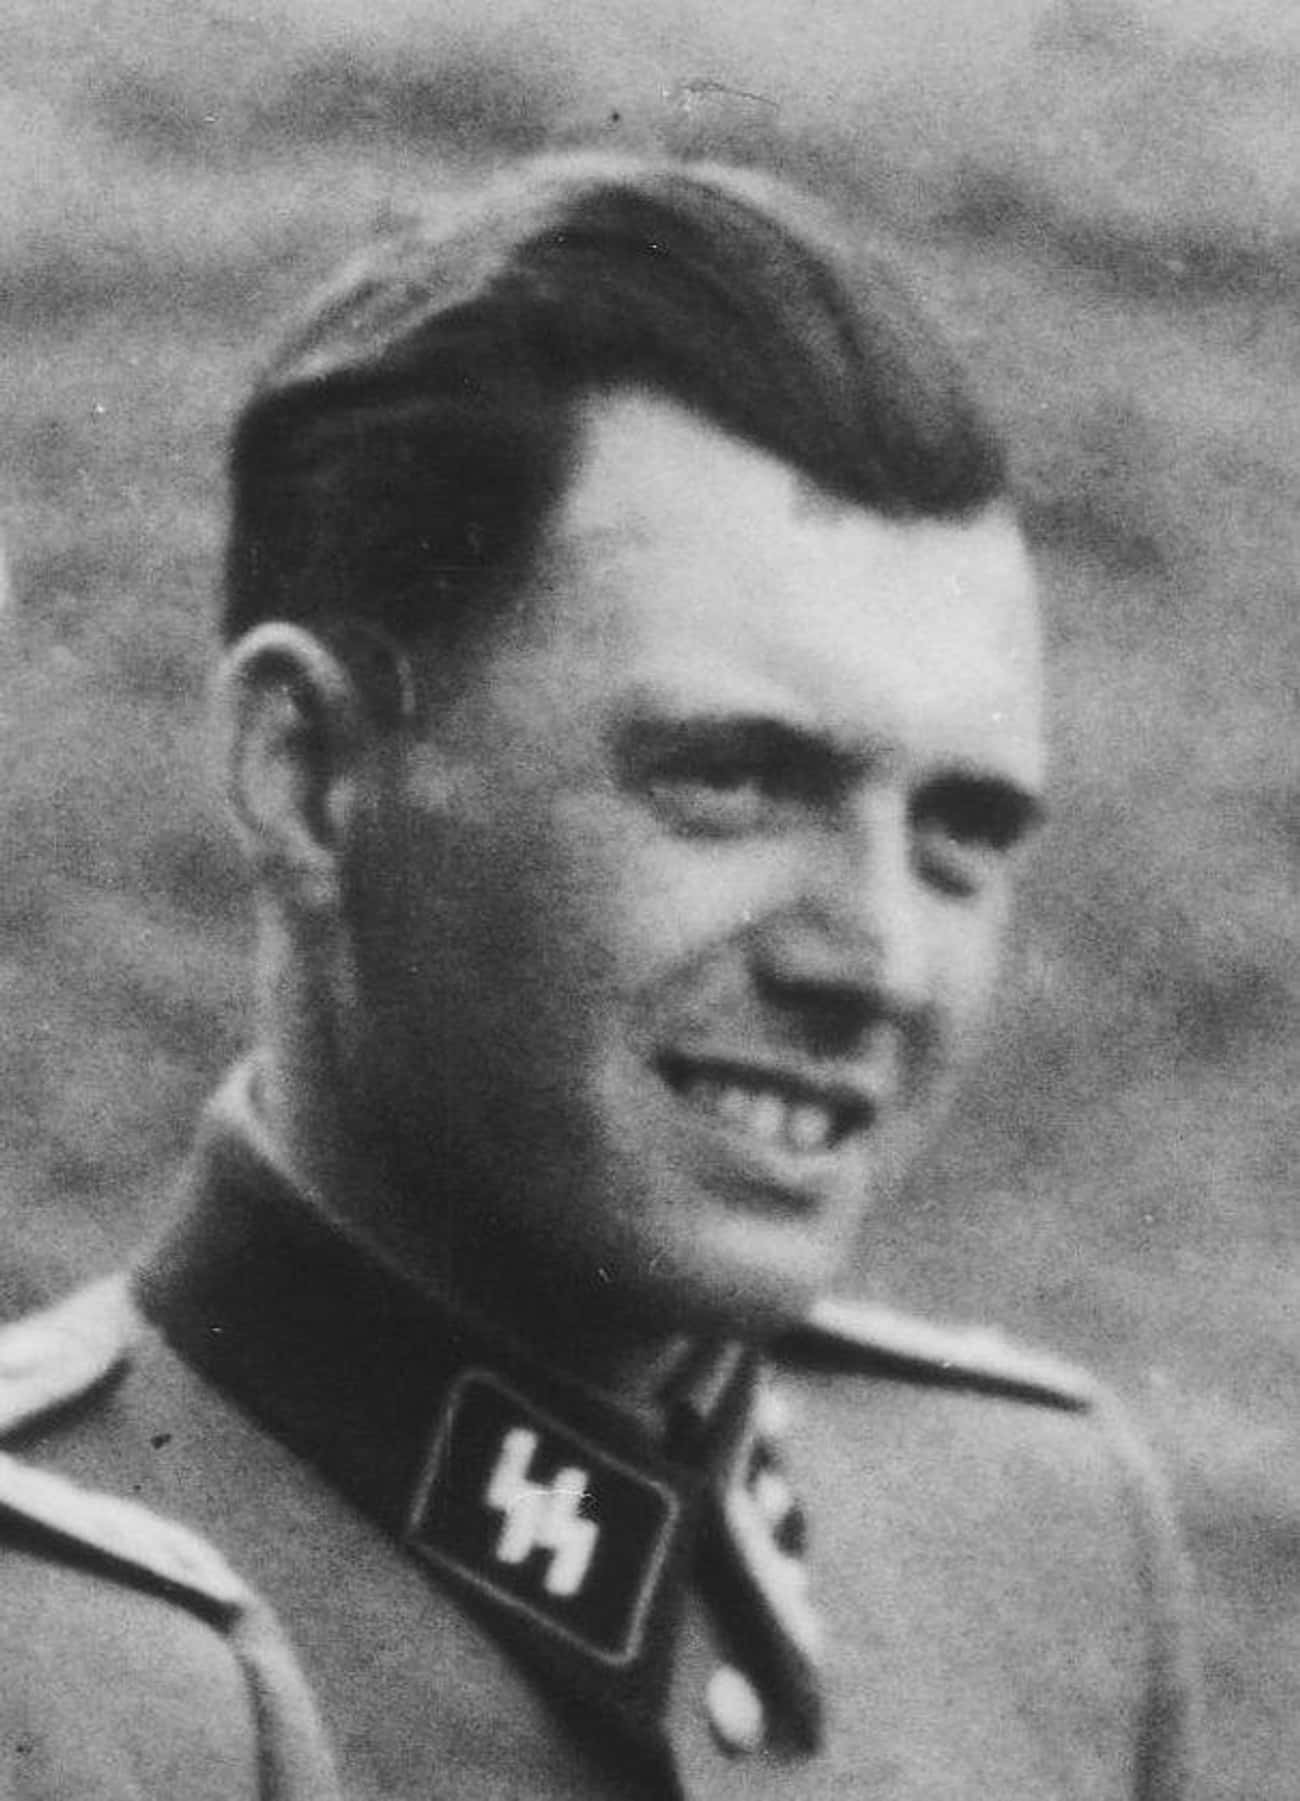 Josef Mengele Lived A Long And Fruitful Life